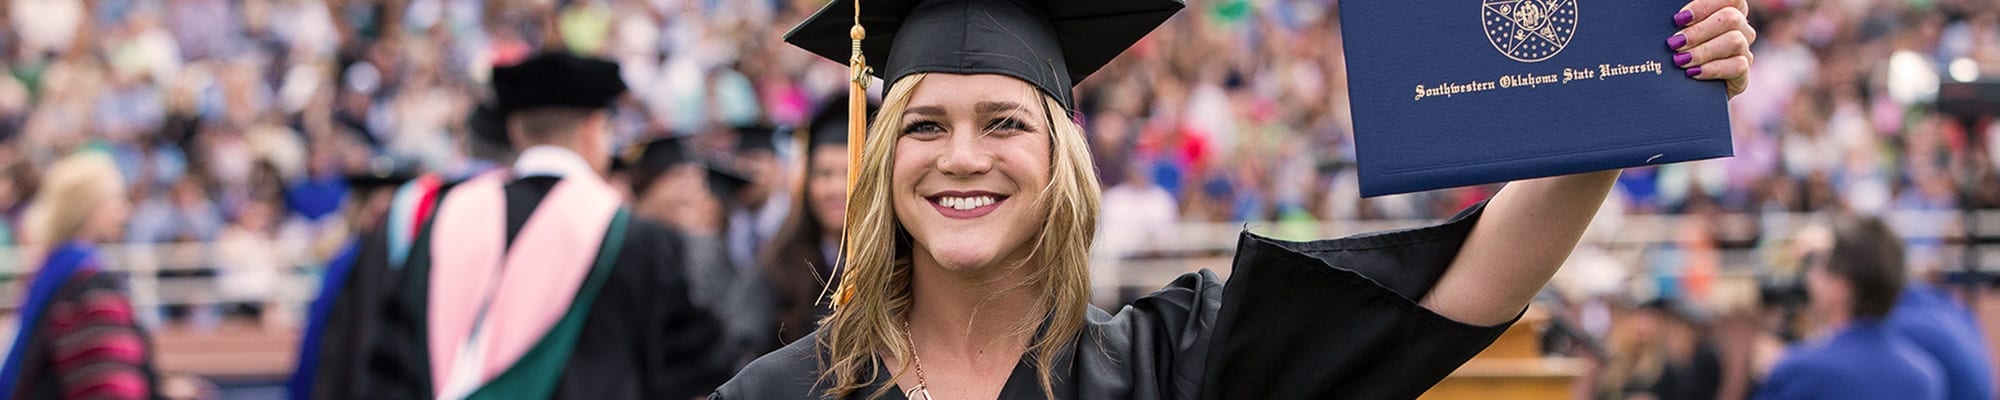 Oklahoma Reach Higher students graduating from Southwestern Oklahoma State University (SWOSU).